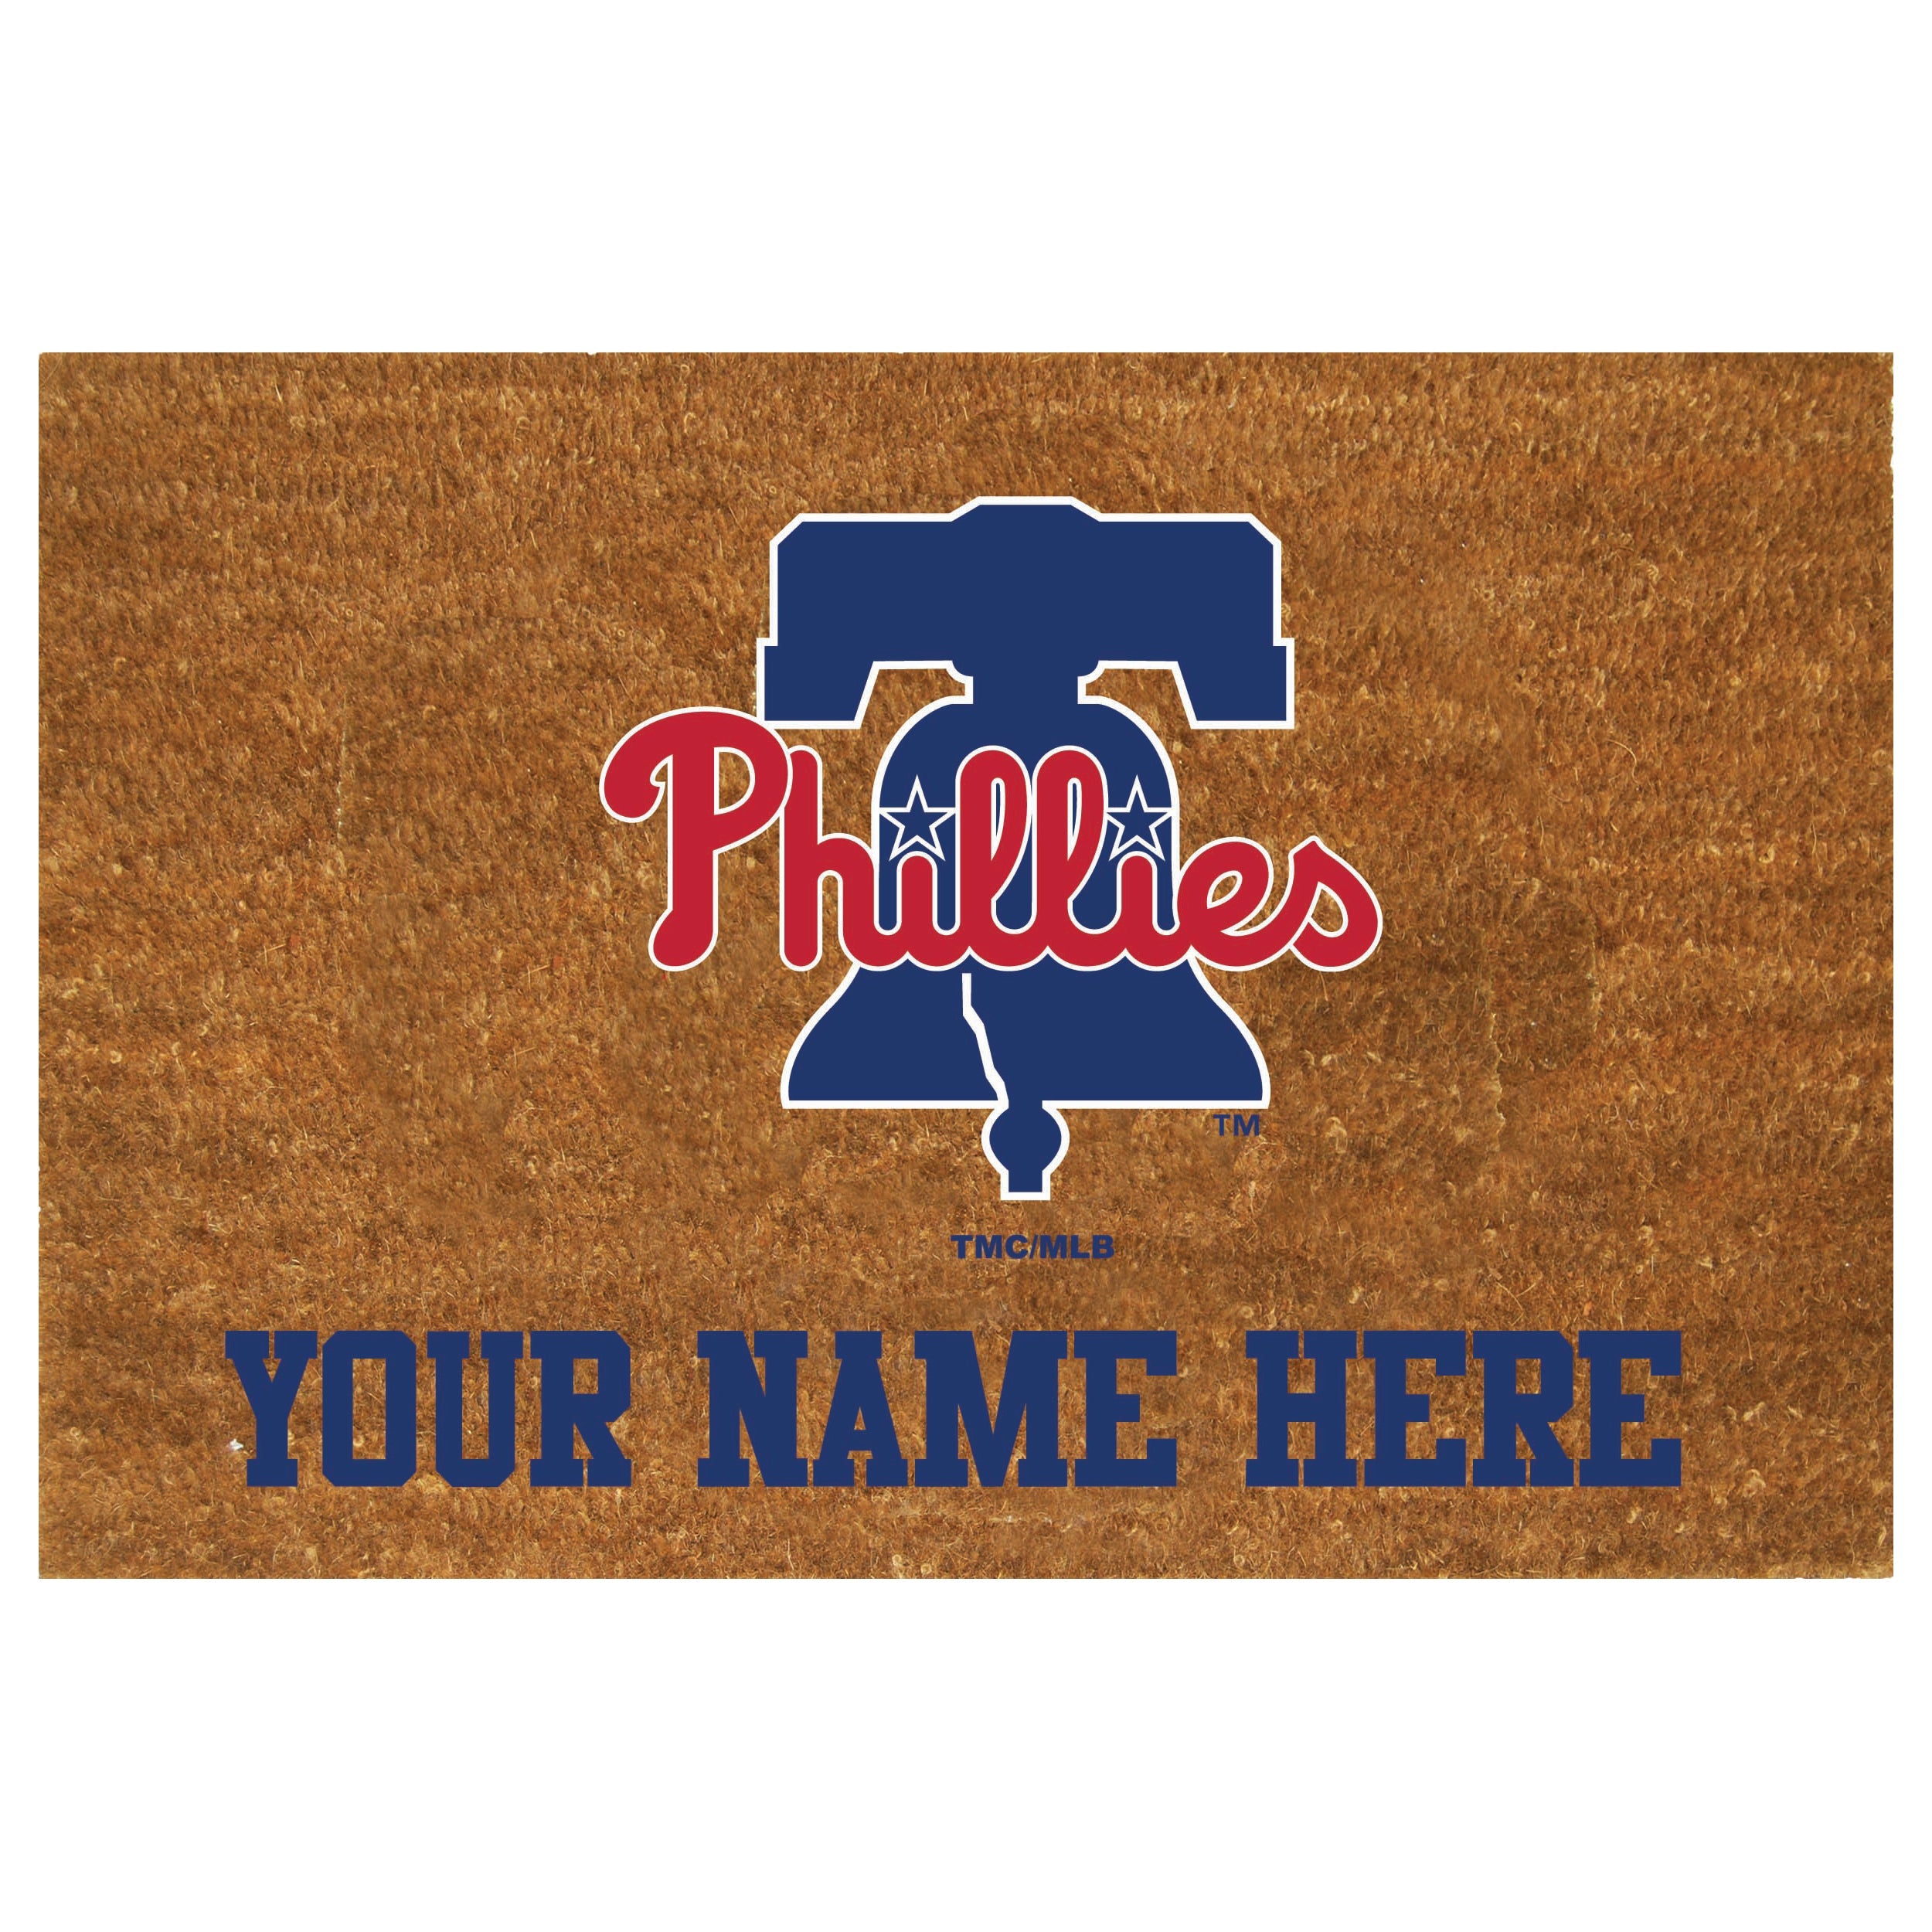 Personalized Doormat | Philadelphia Phillies